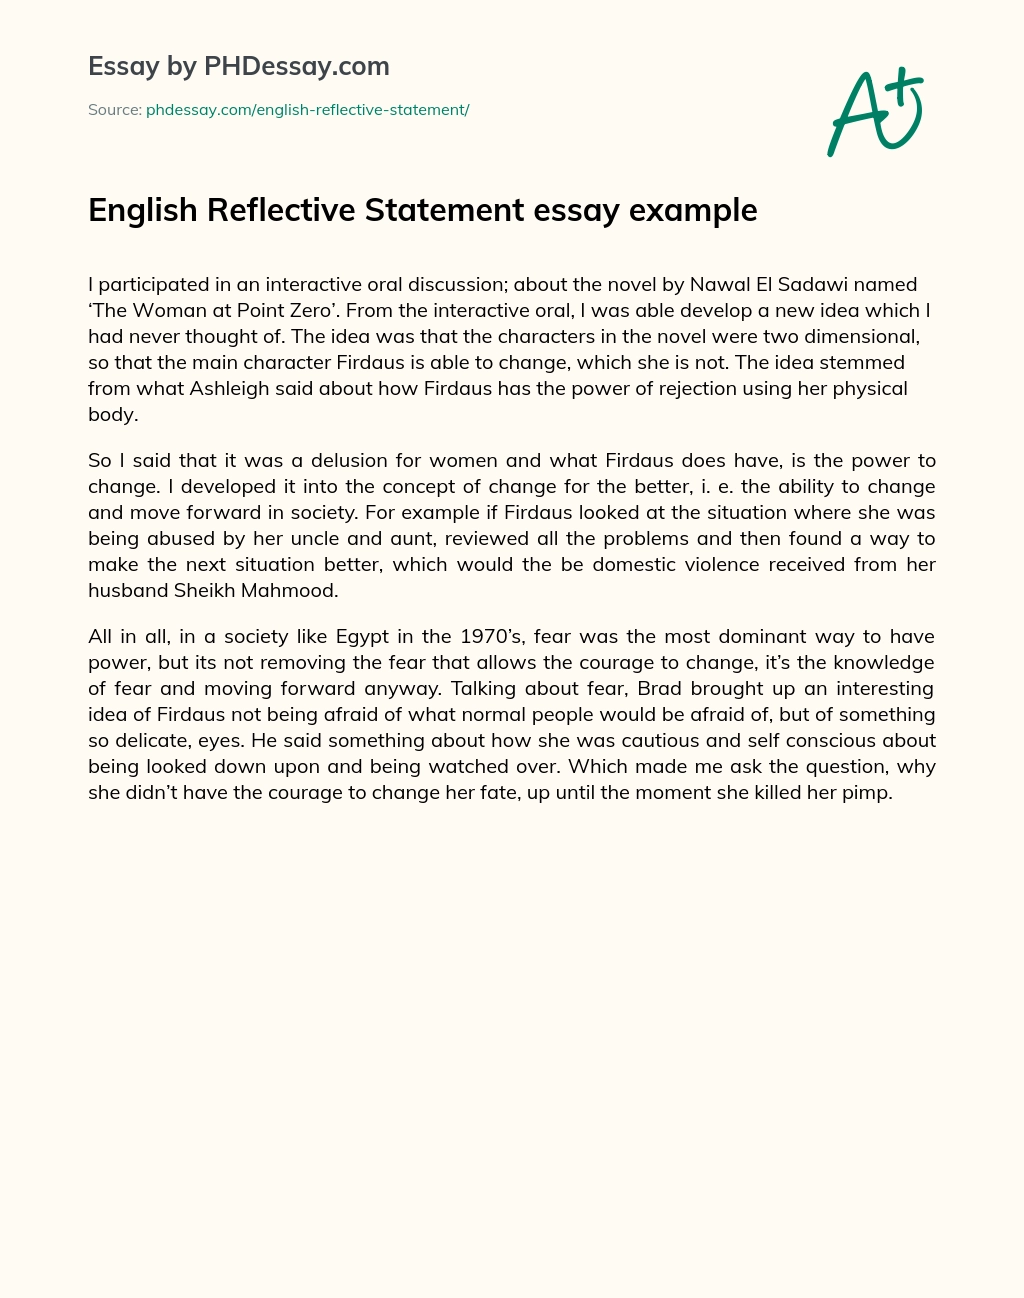 English Reflective Statement essay example essay